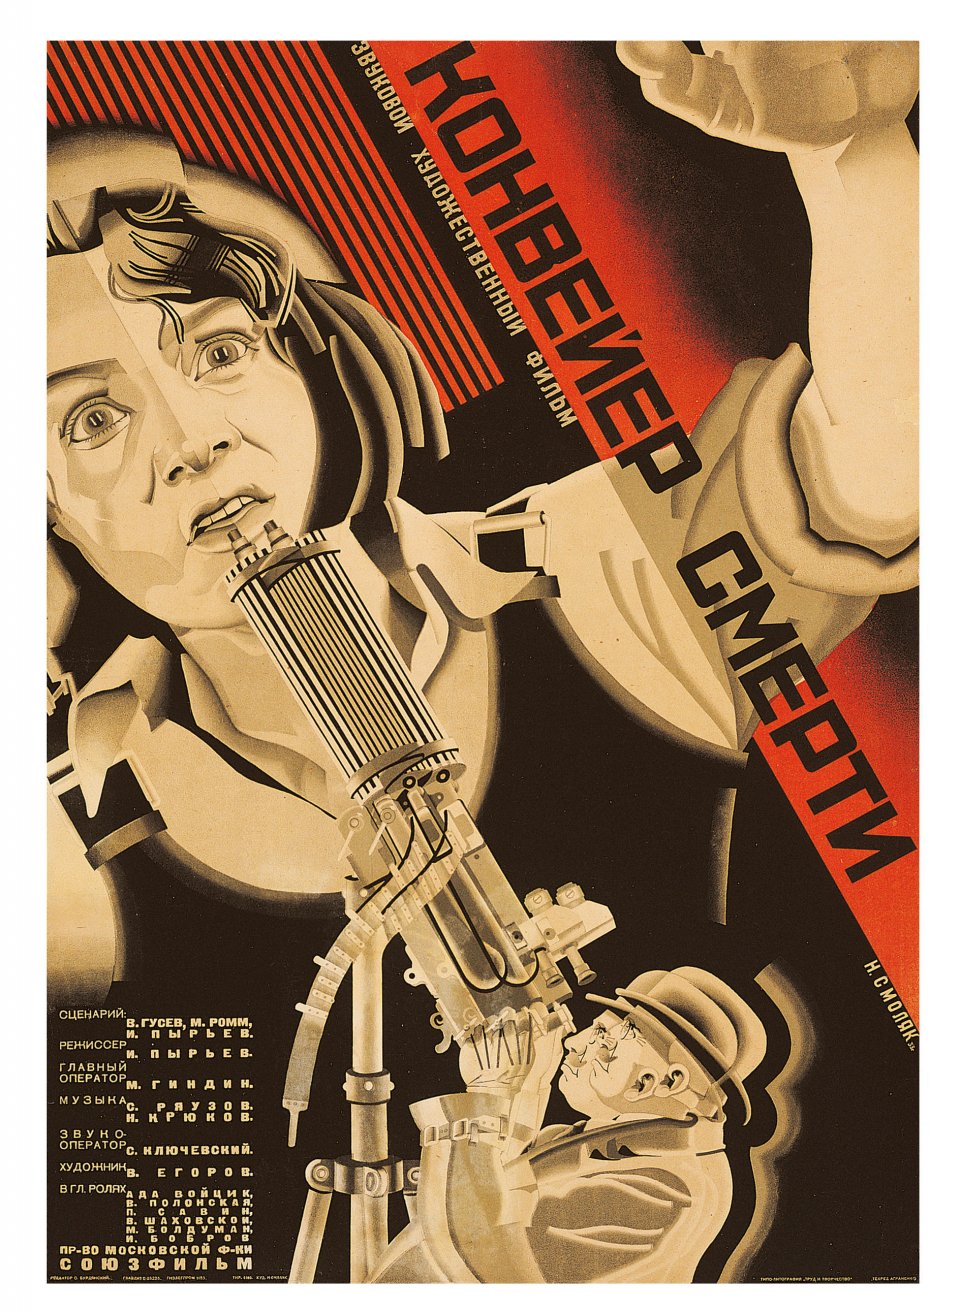 Copyright: © TASCHEN / Susan Pack, California | Seite. 161 | Smolyakovsky, Film poster for Konveier smerti, 1933 